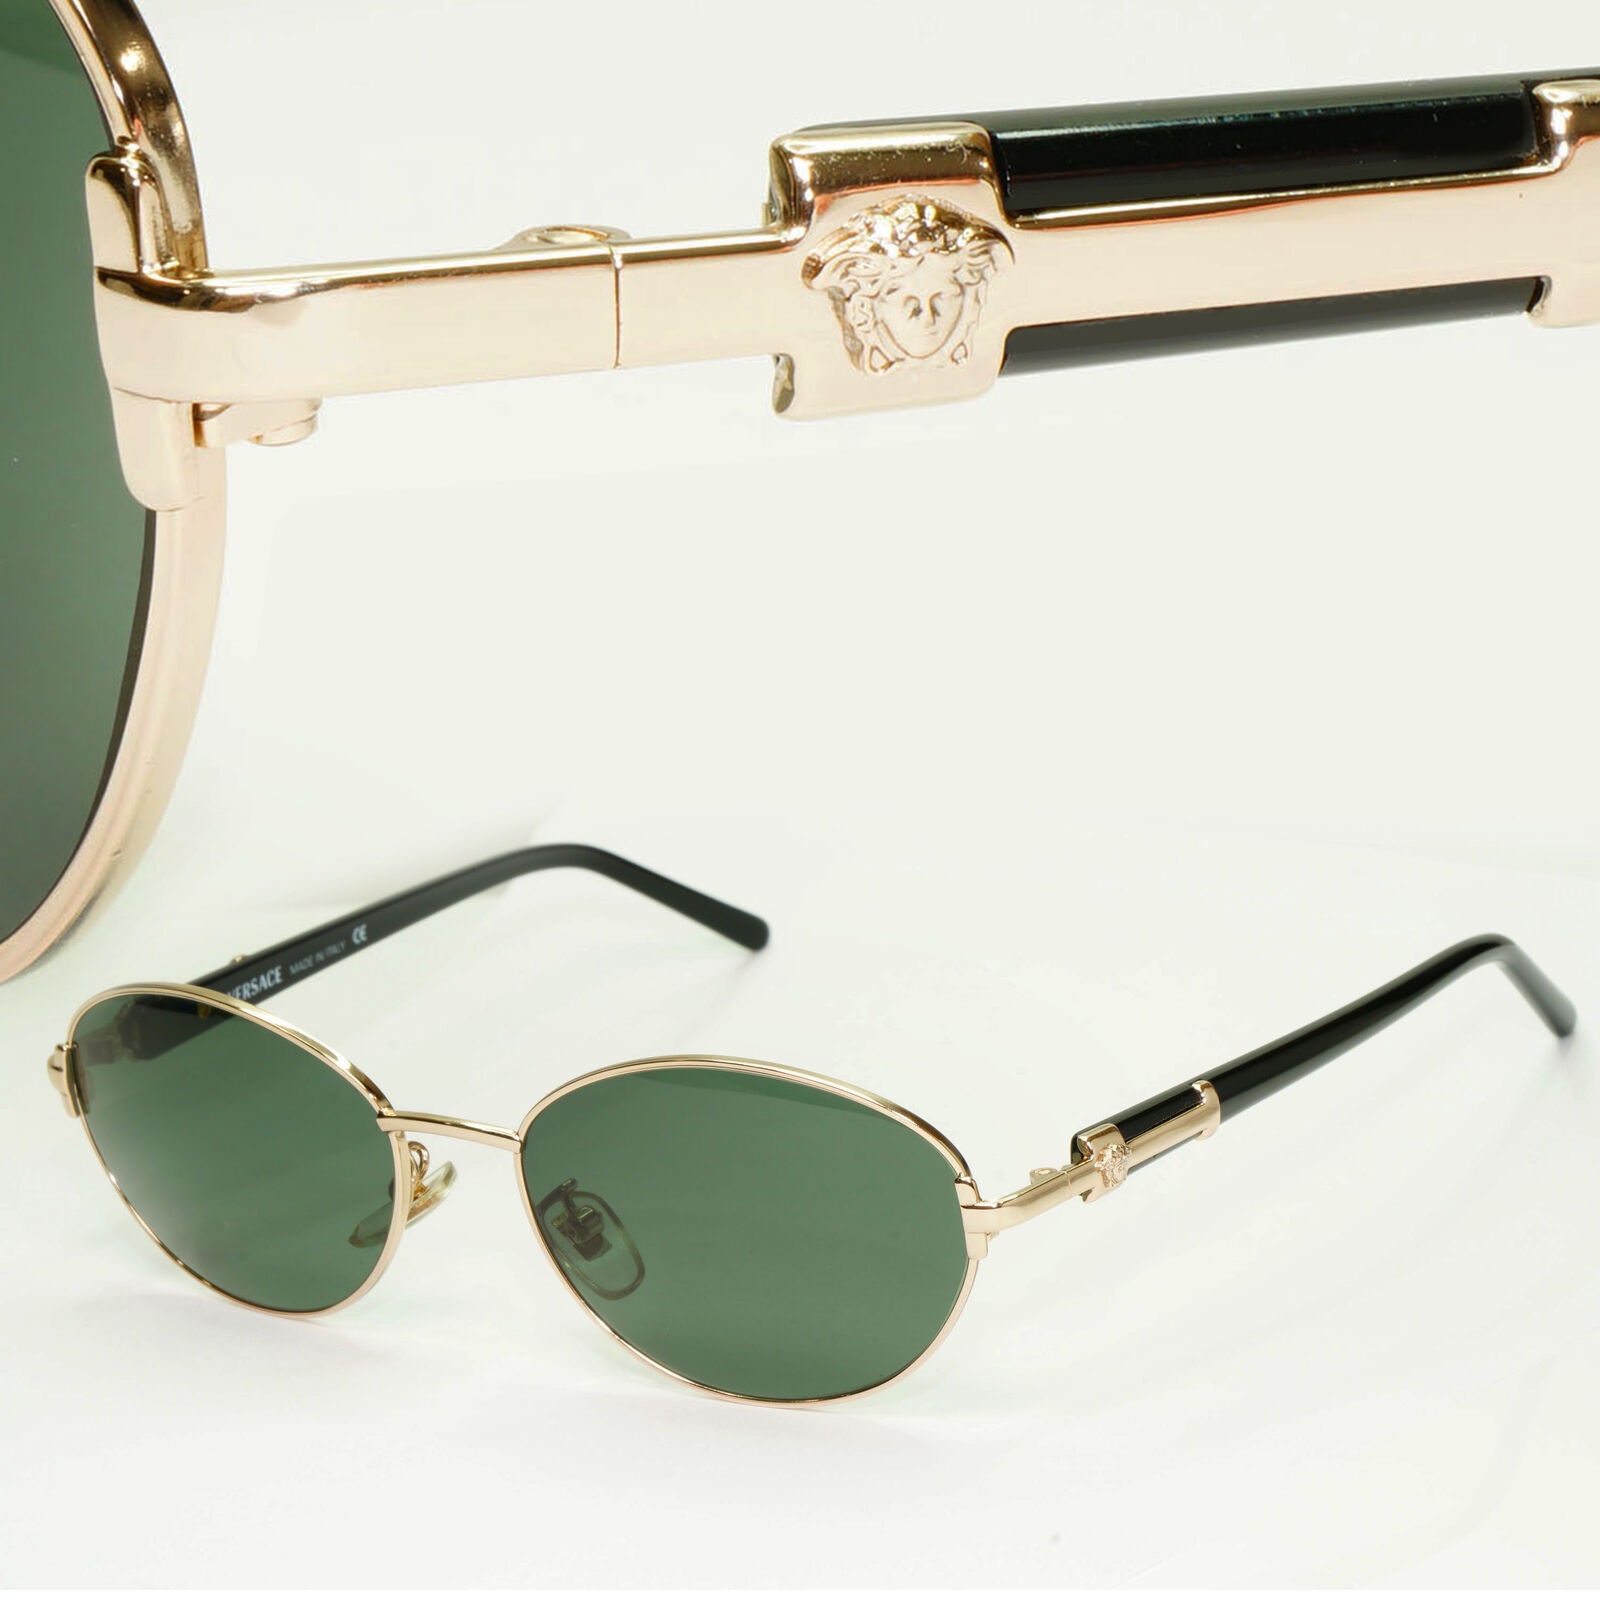 Gianni Versace 1995 Sunglasses Vintage Gold Black Green Oval